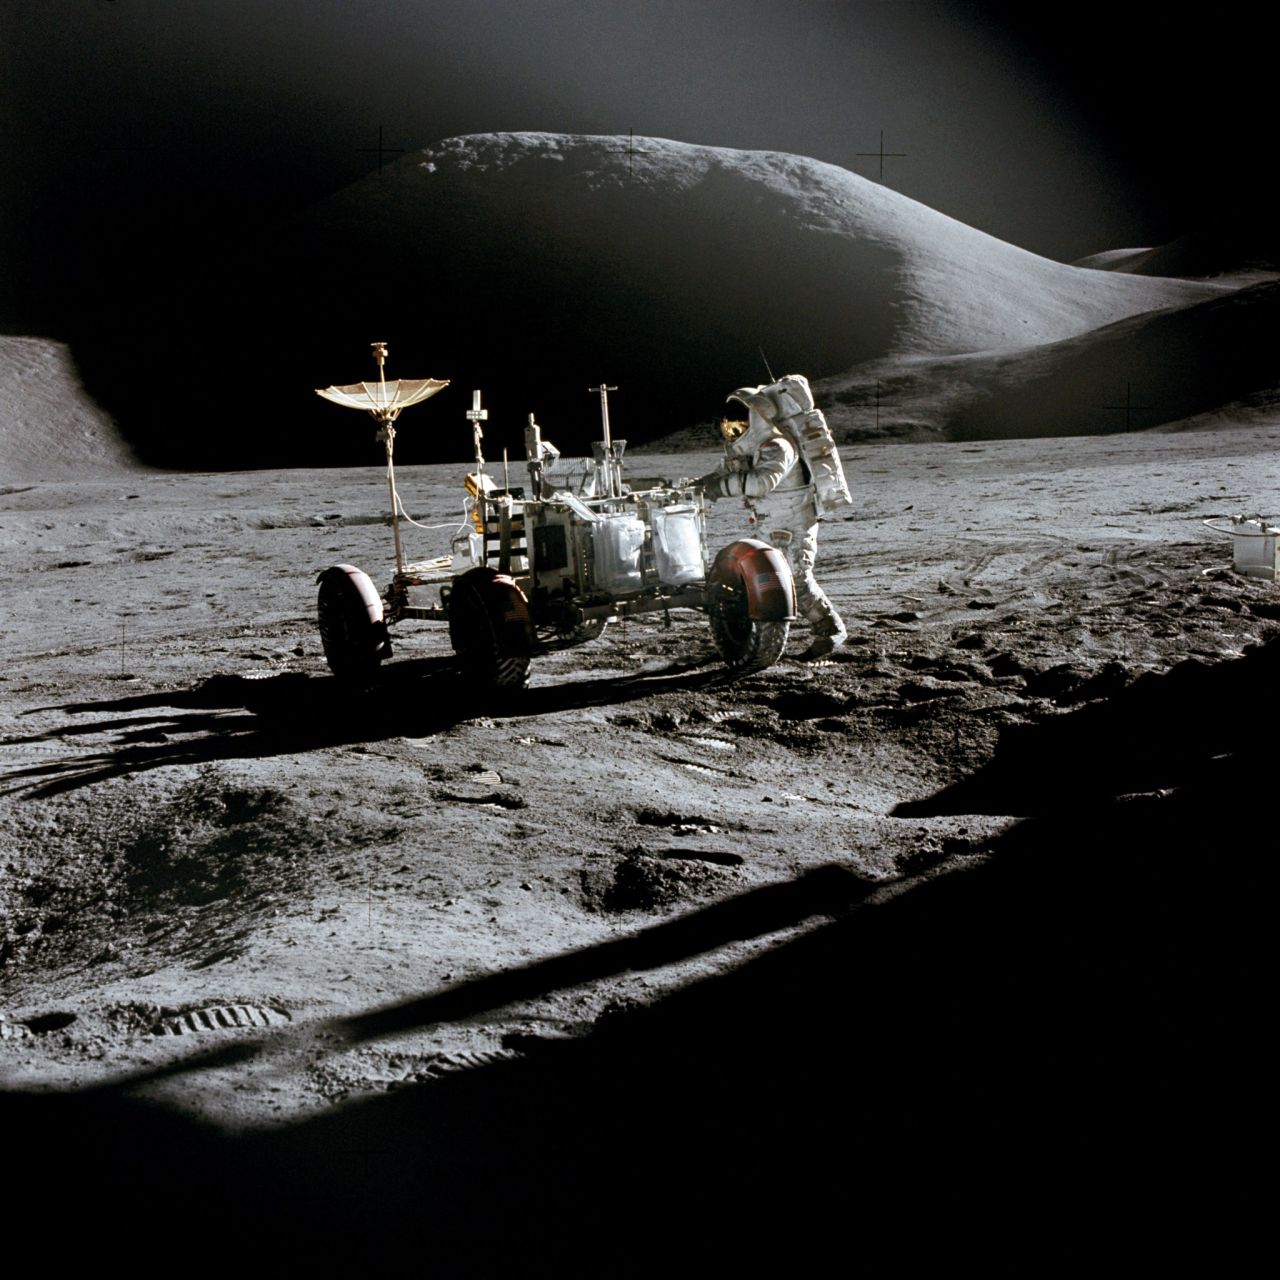 Irwin works near the lunar rover.